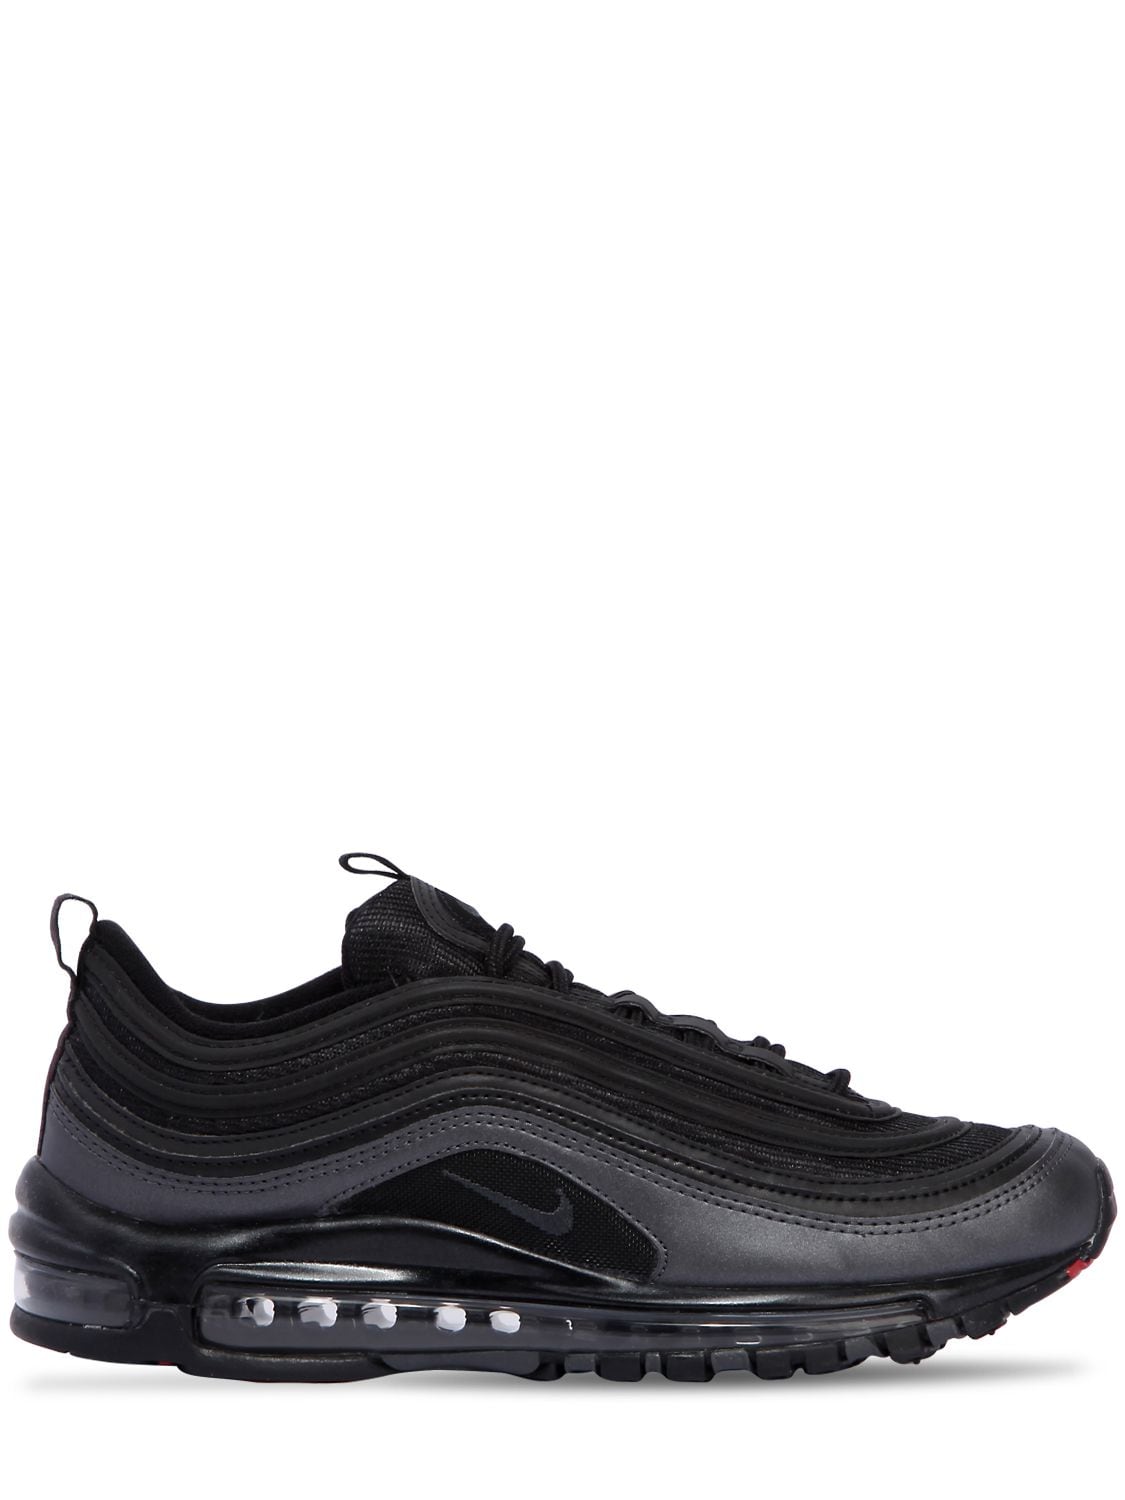 Nike Air Max 97 Sneakers In Black